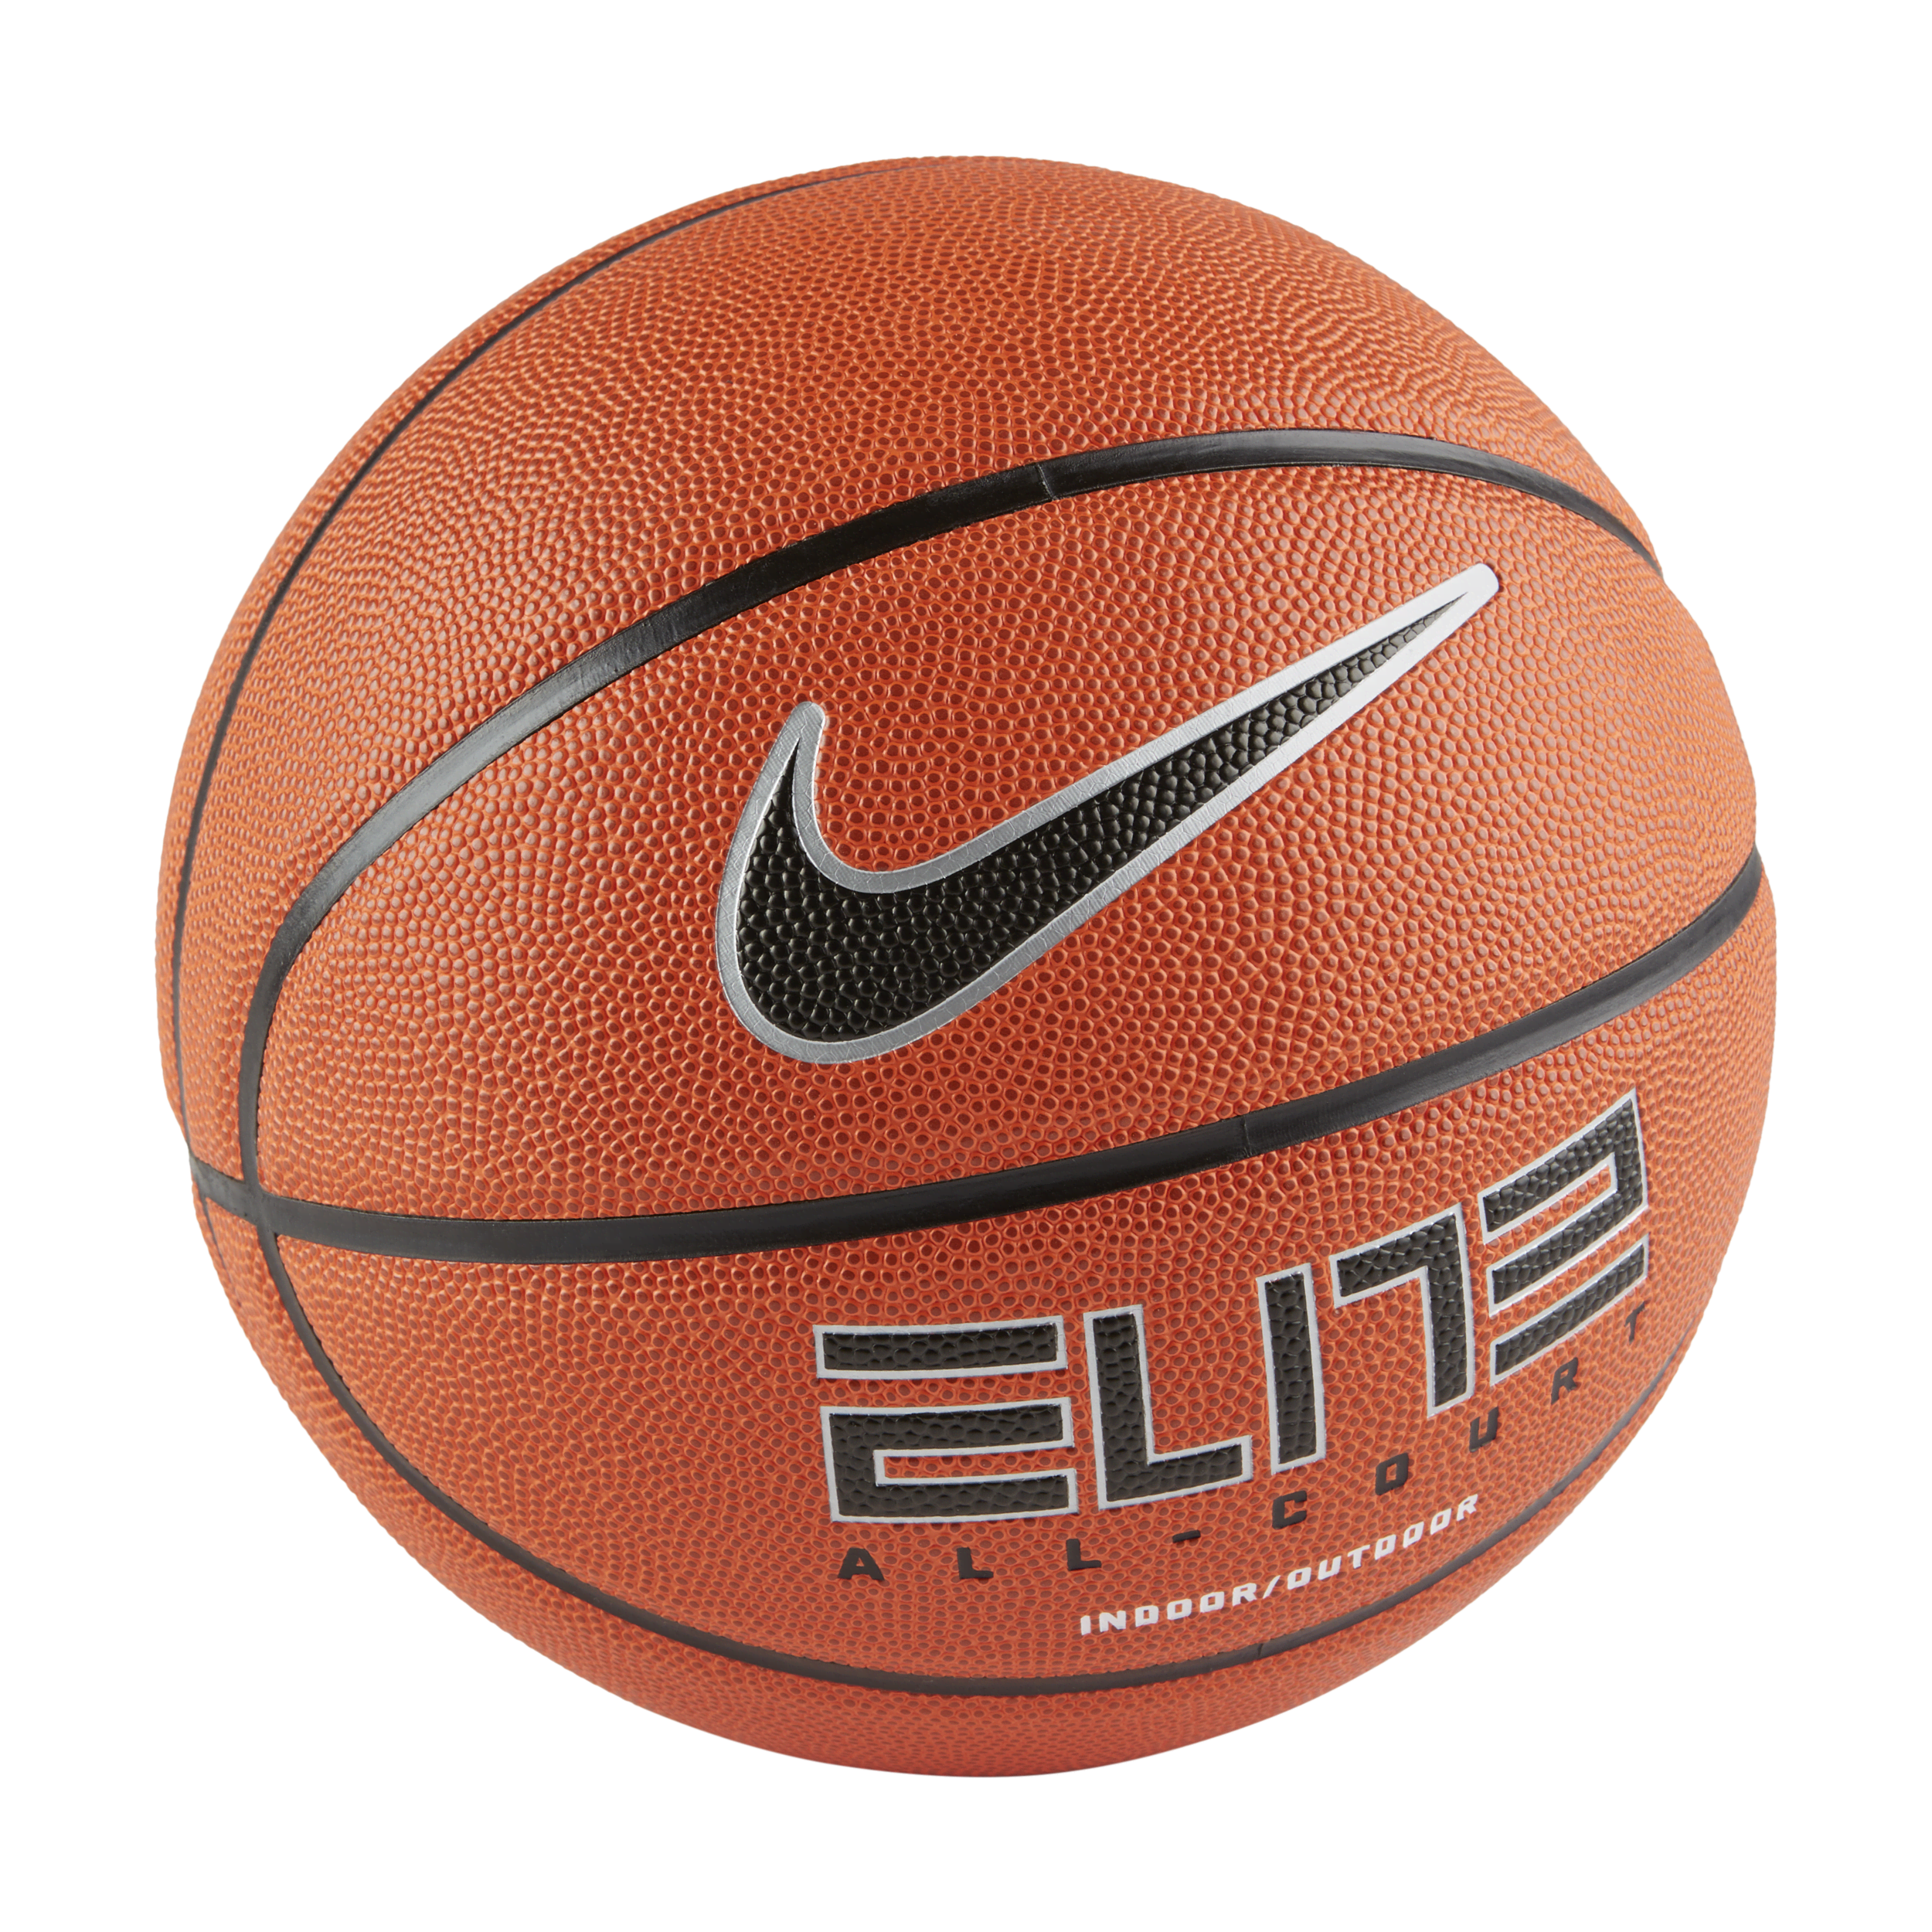 Nike Elite All-Court 8P Basketbal (zonder lucht) - Oranje